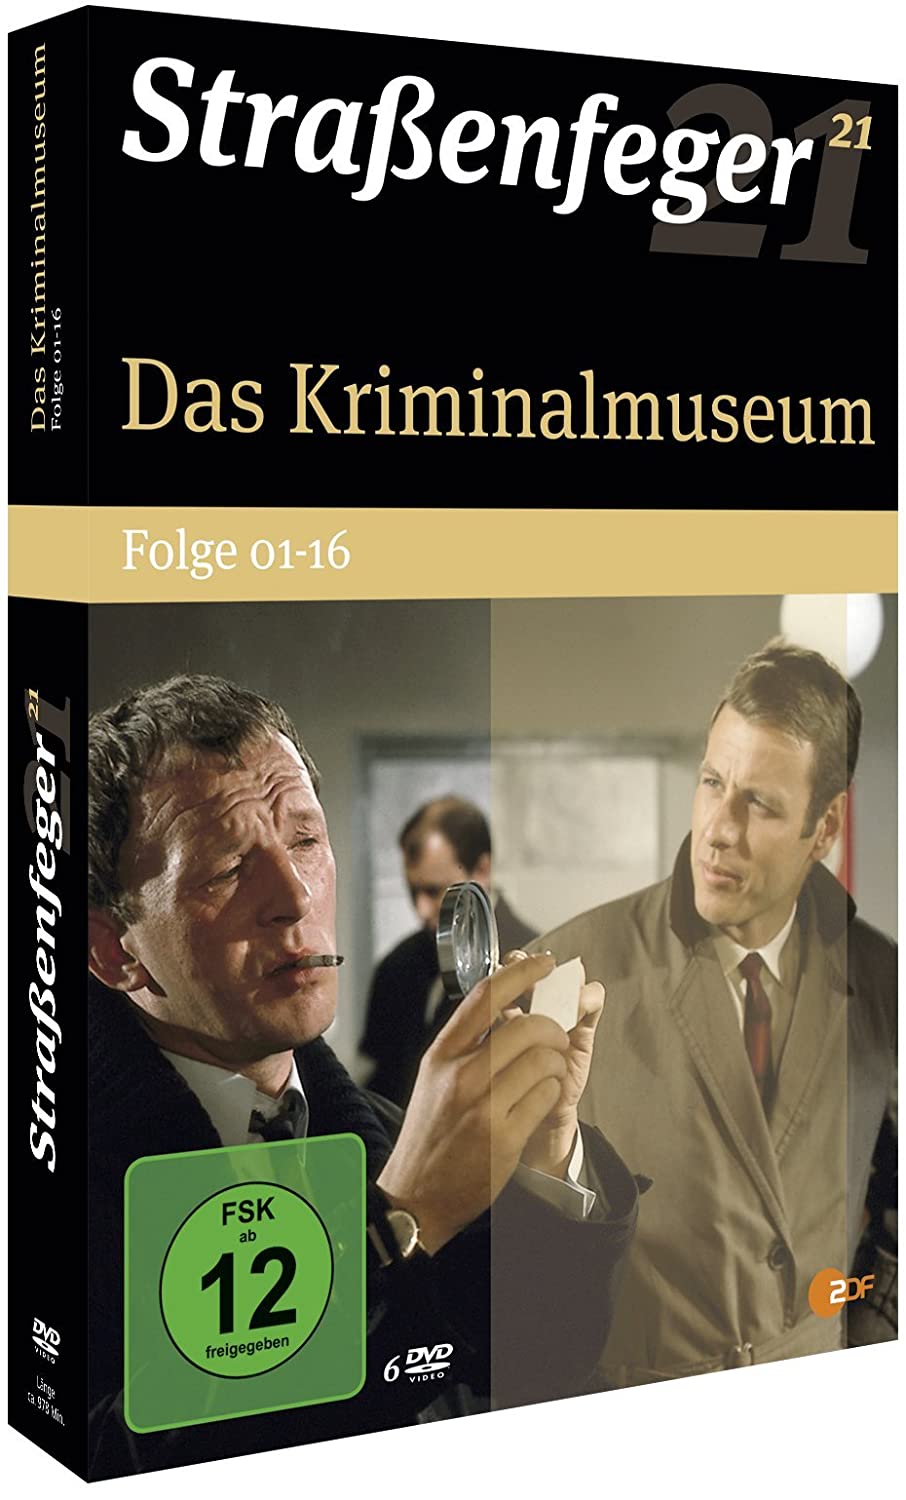 Straßenfeger 21: Das Kriminalmuseum I (Folge 01-16) (6 DVD)